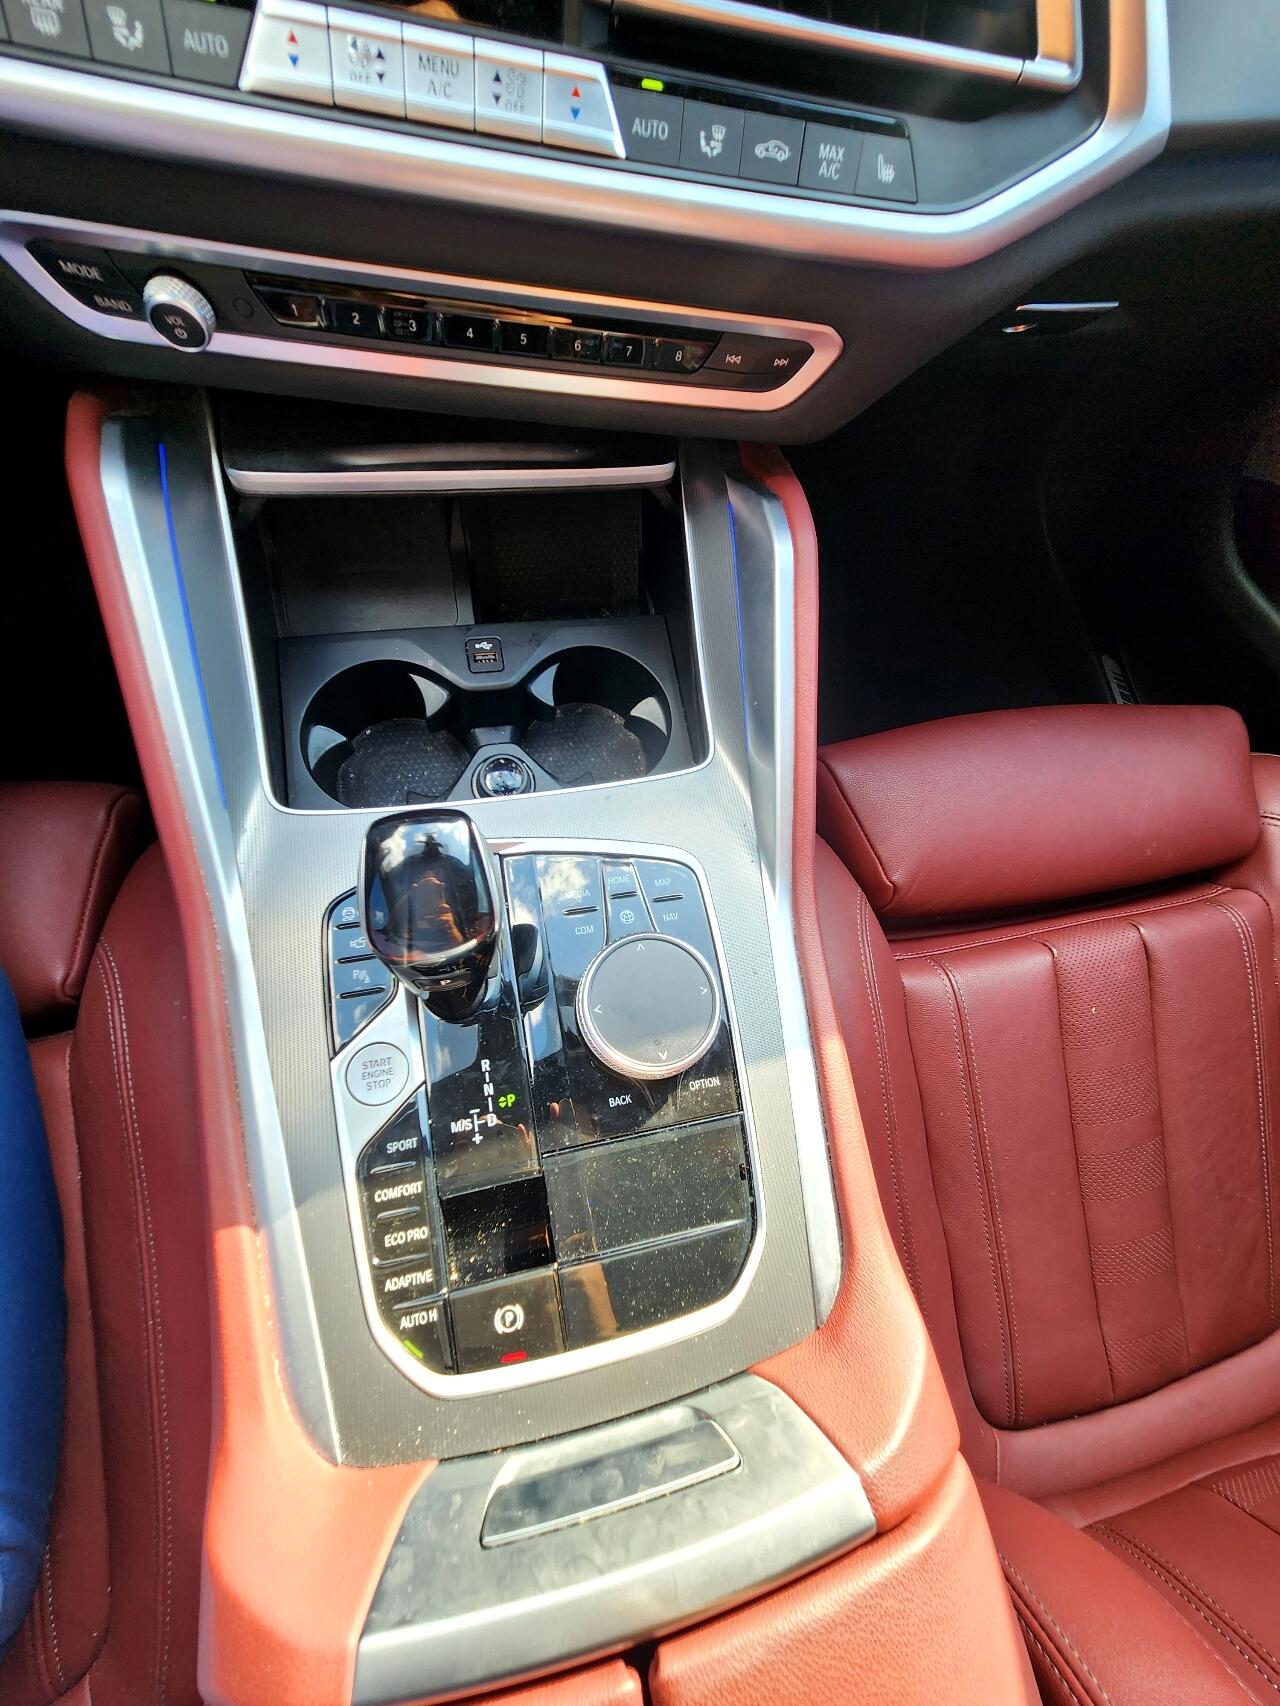 2021 BMW X6 SUV / Crossover - $56,999